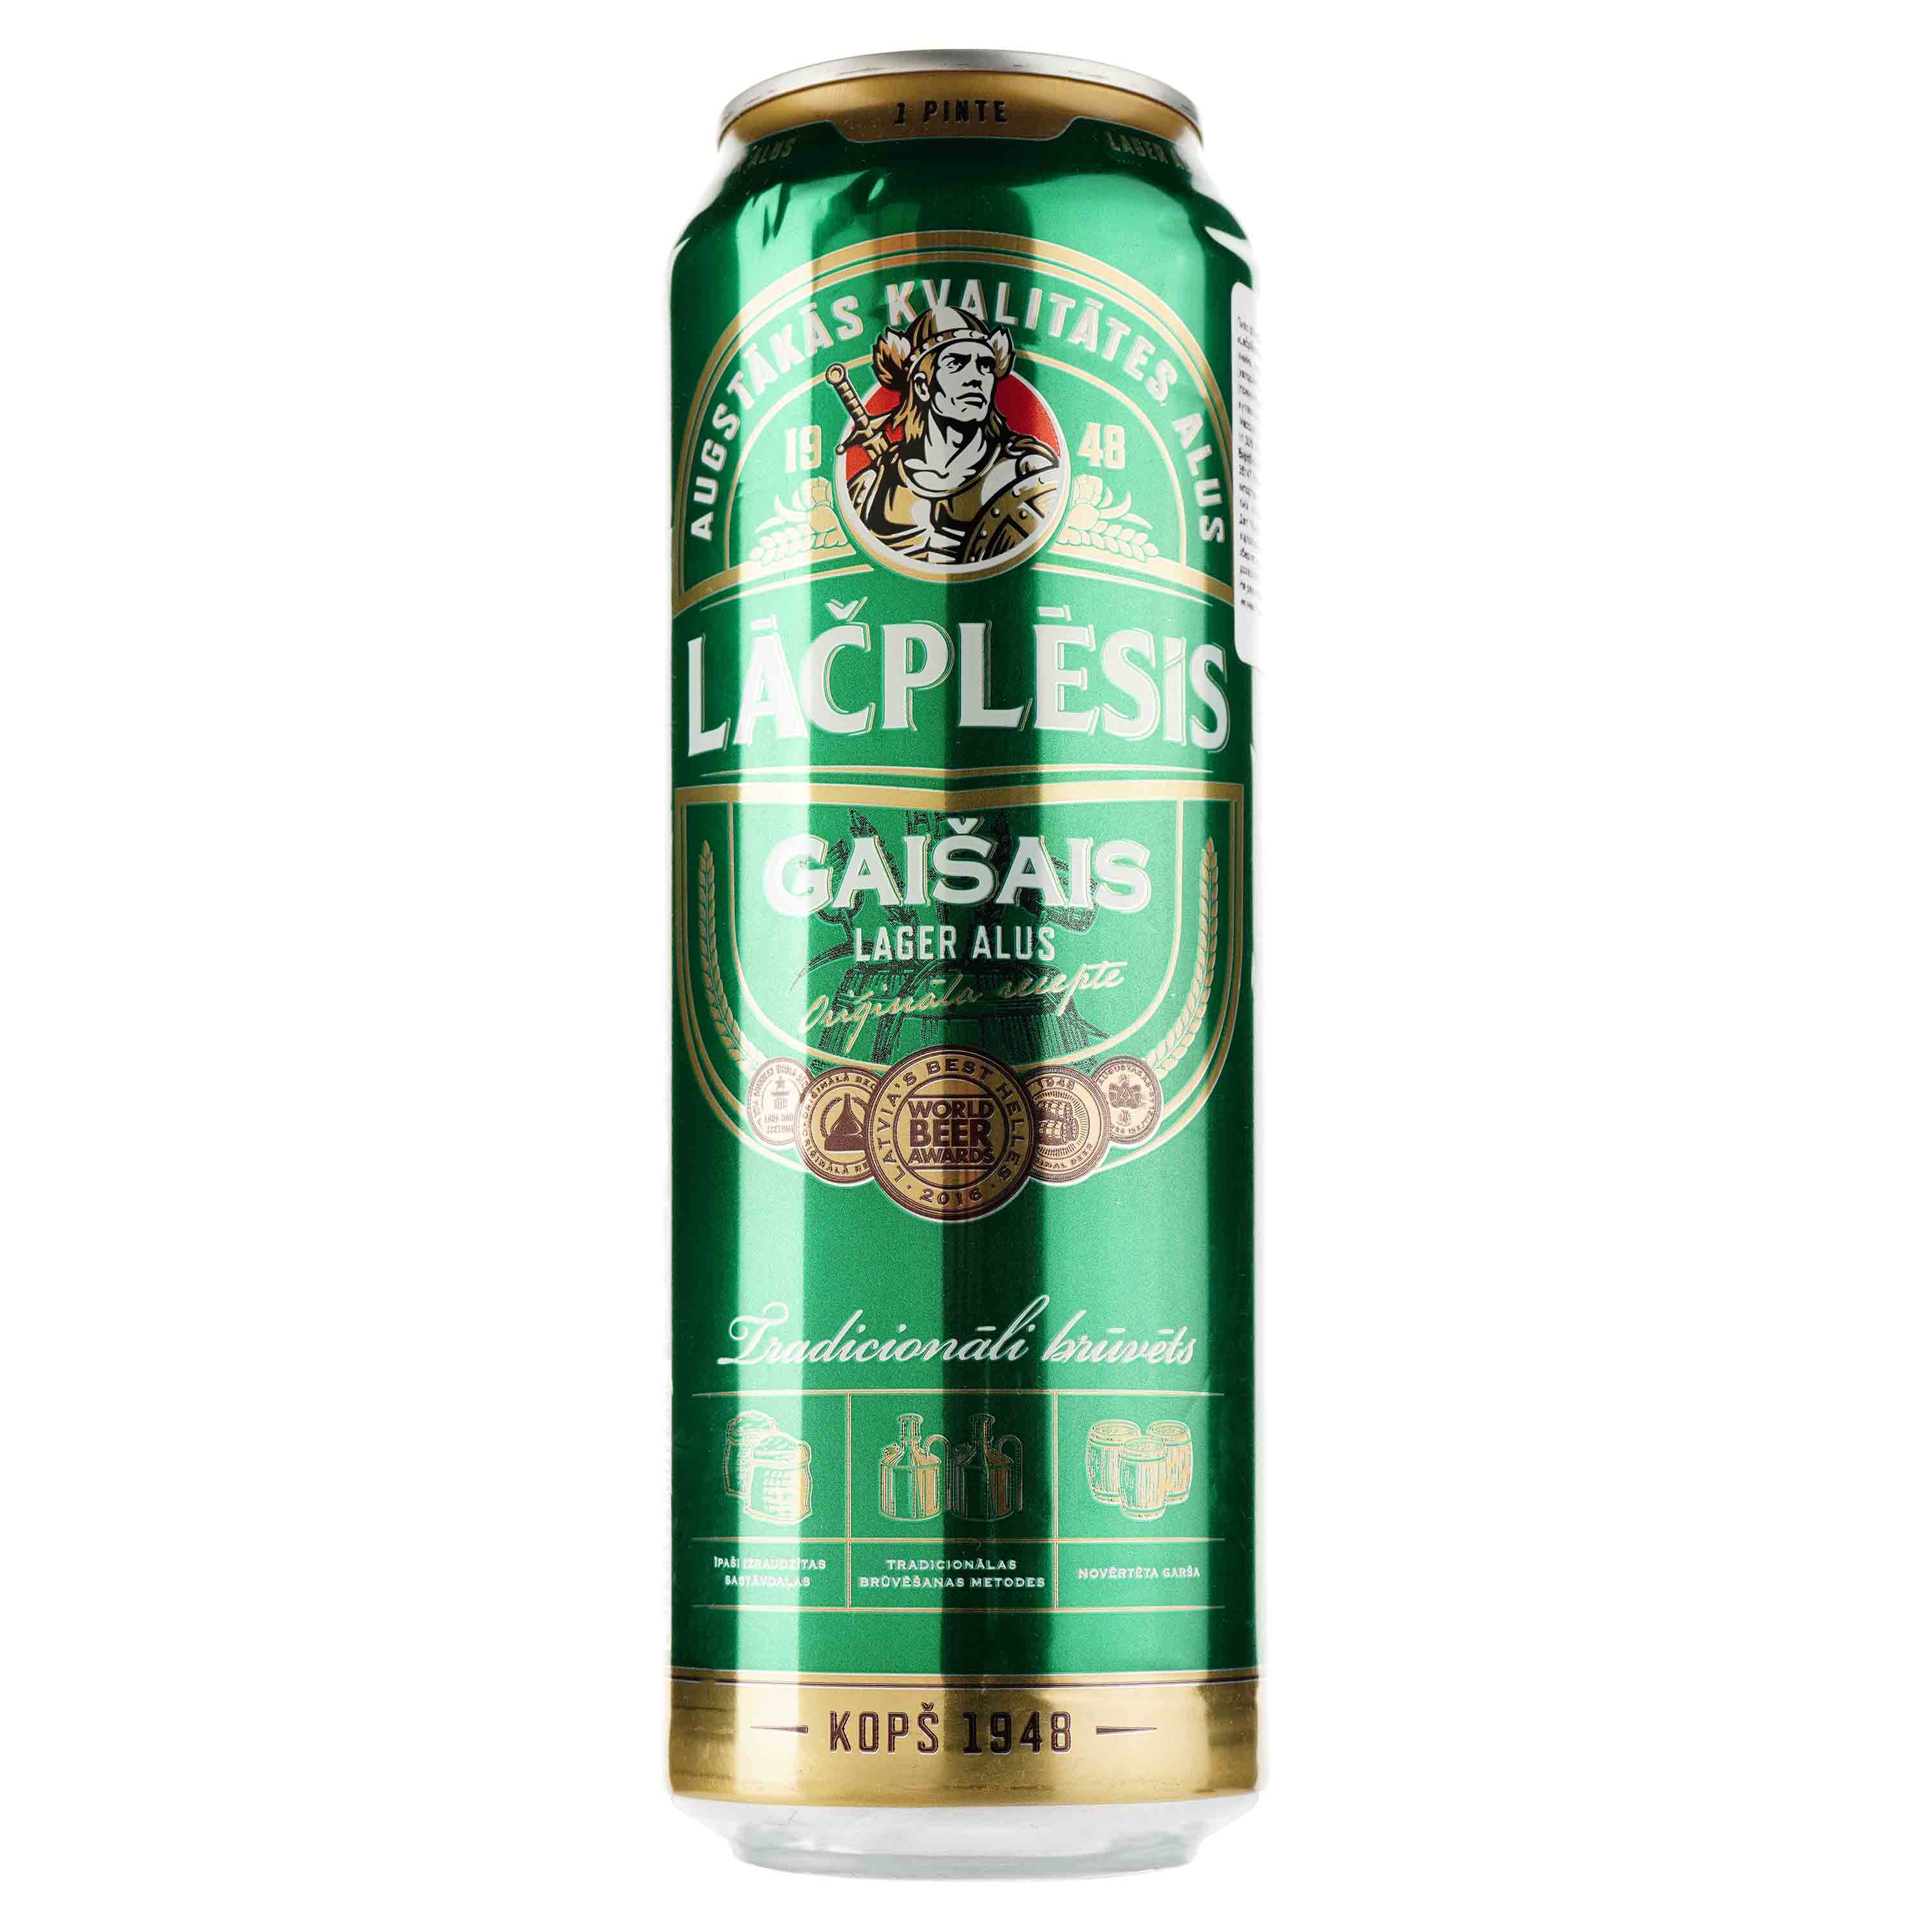 Пиво Lacplesis Gaisais світле, 5%, з/б, 0.568 л - фото 1